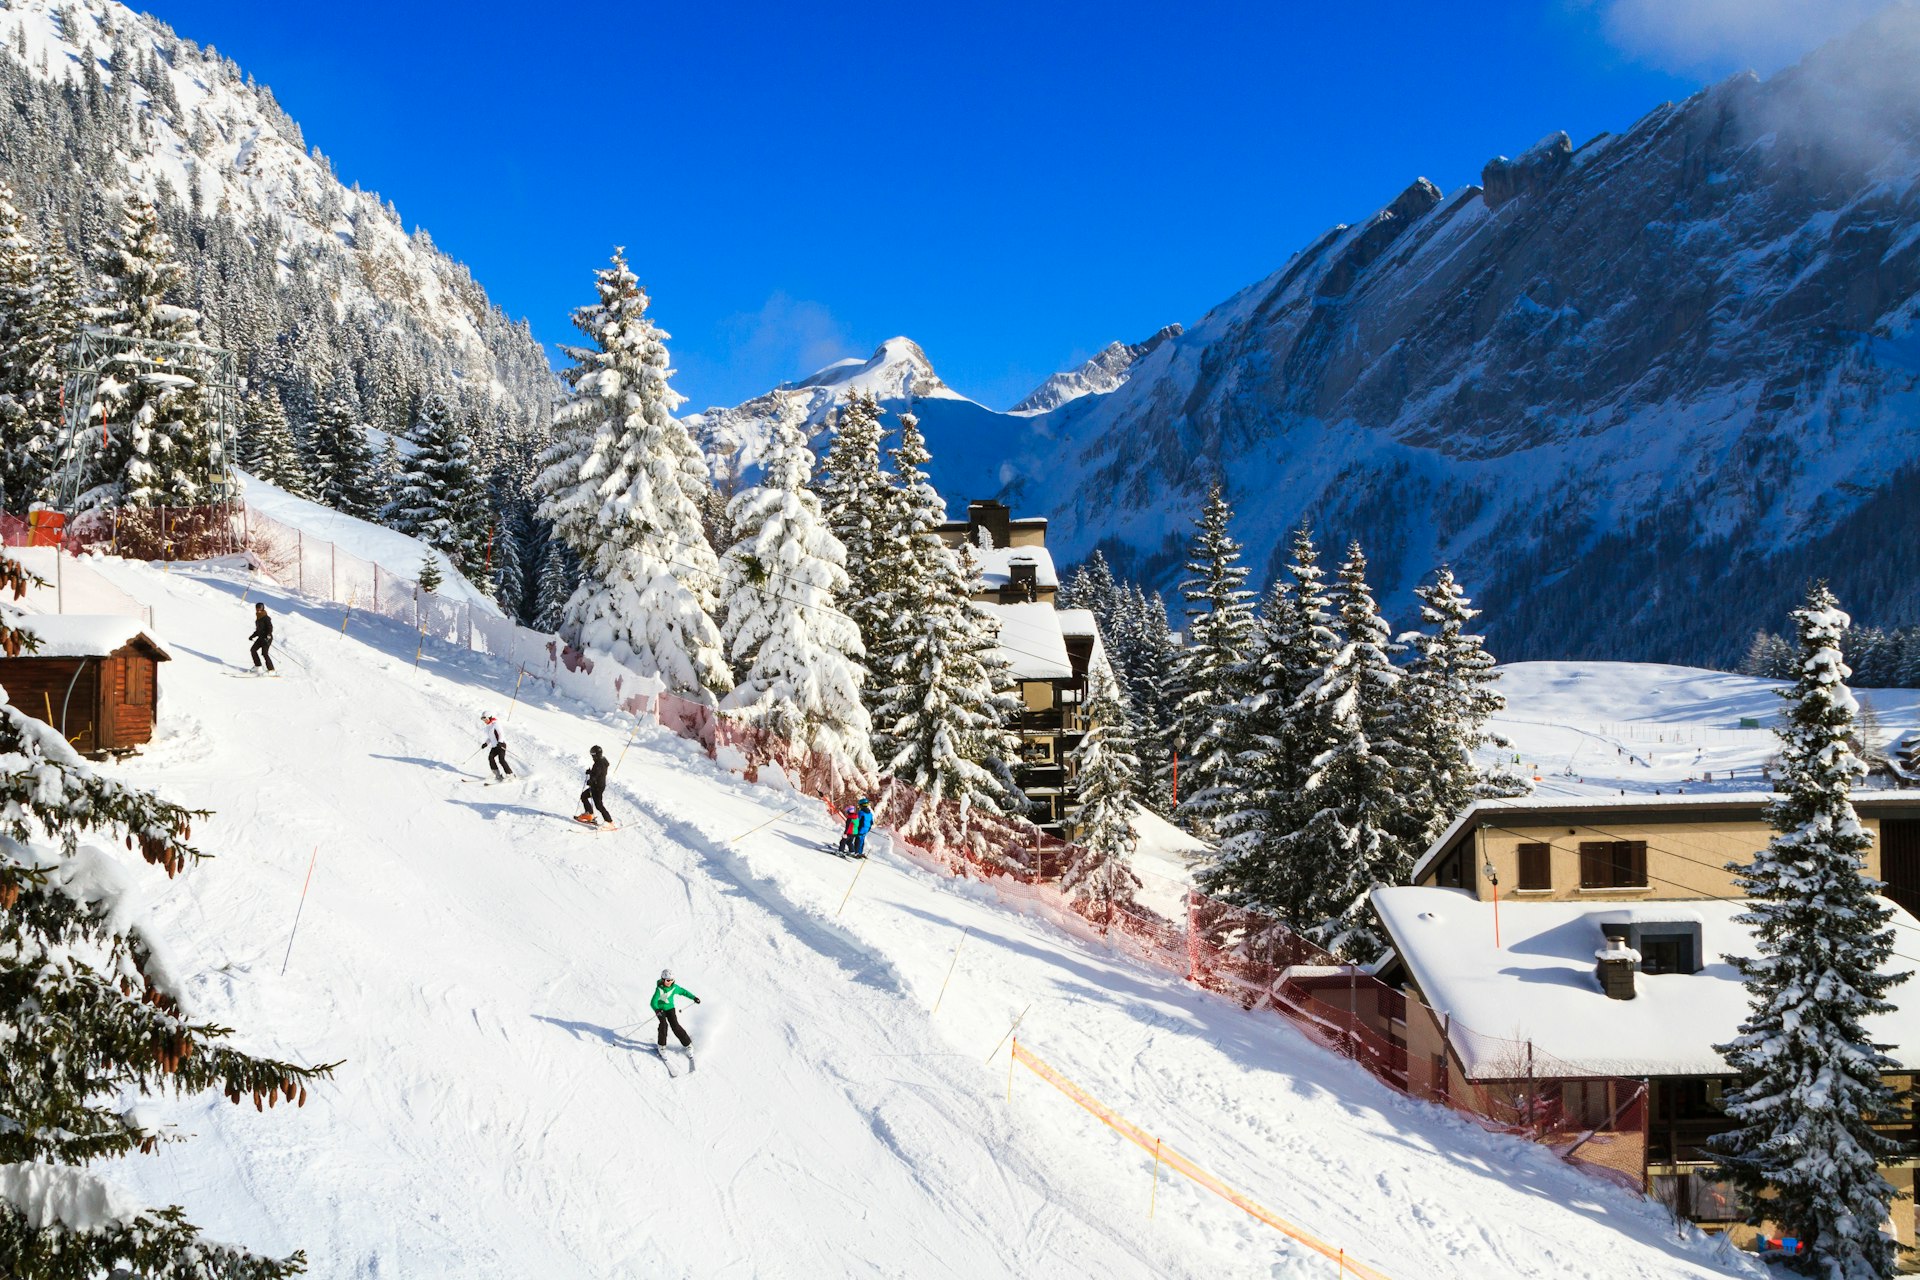 Skiiers make their way down a steep slope in Villars-sur-Ollon